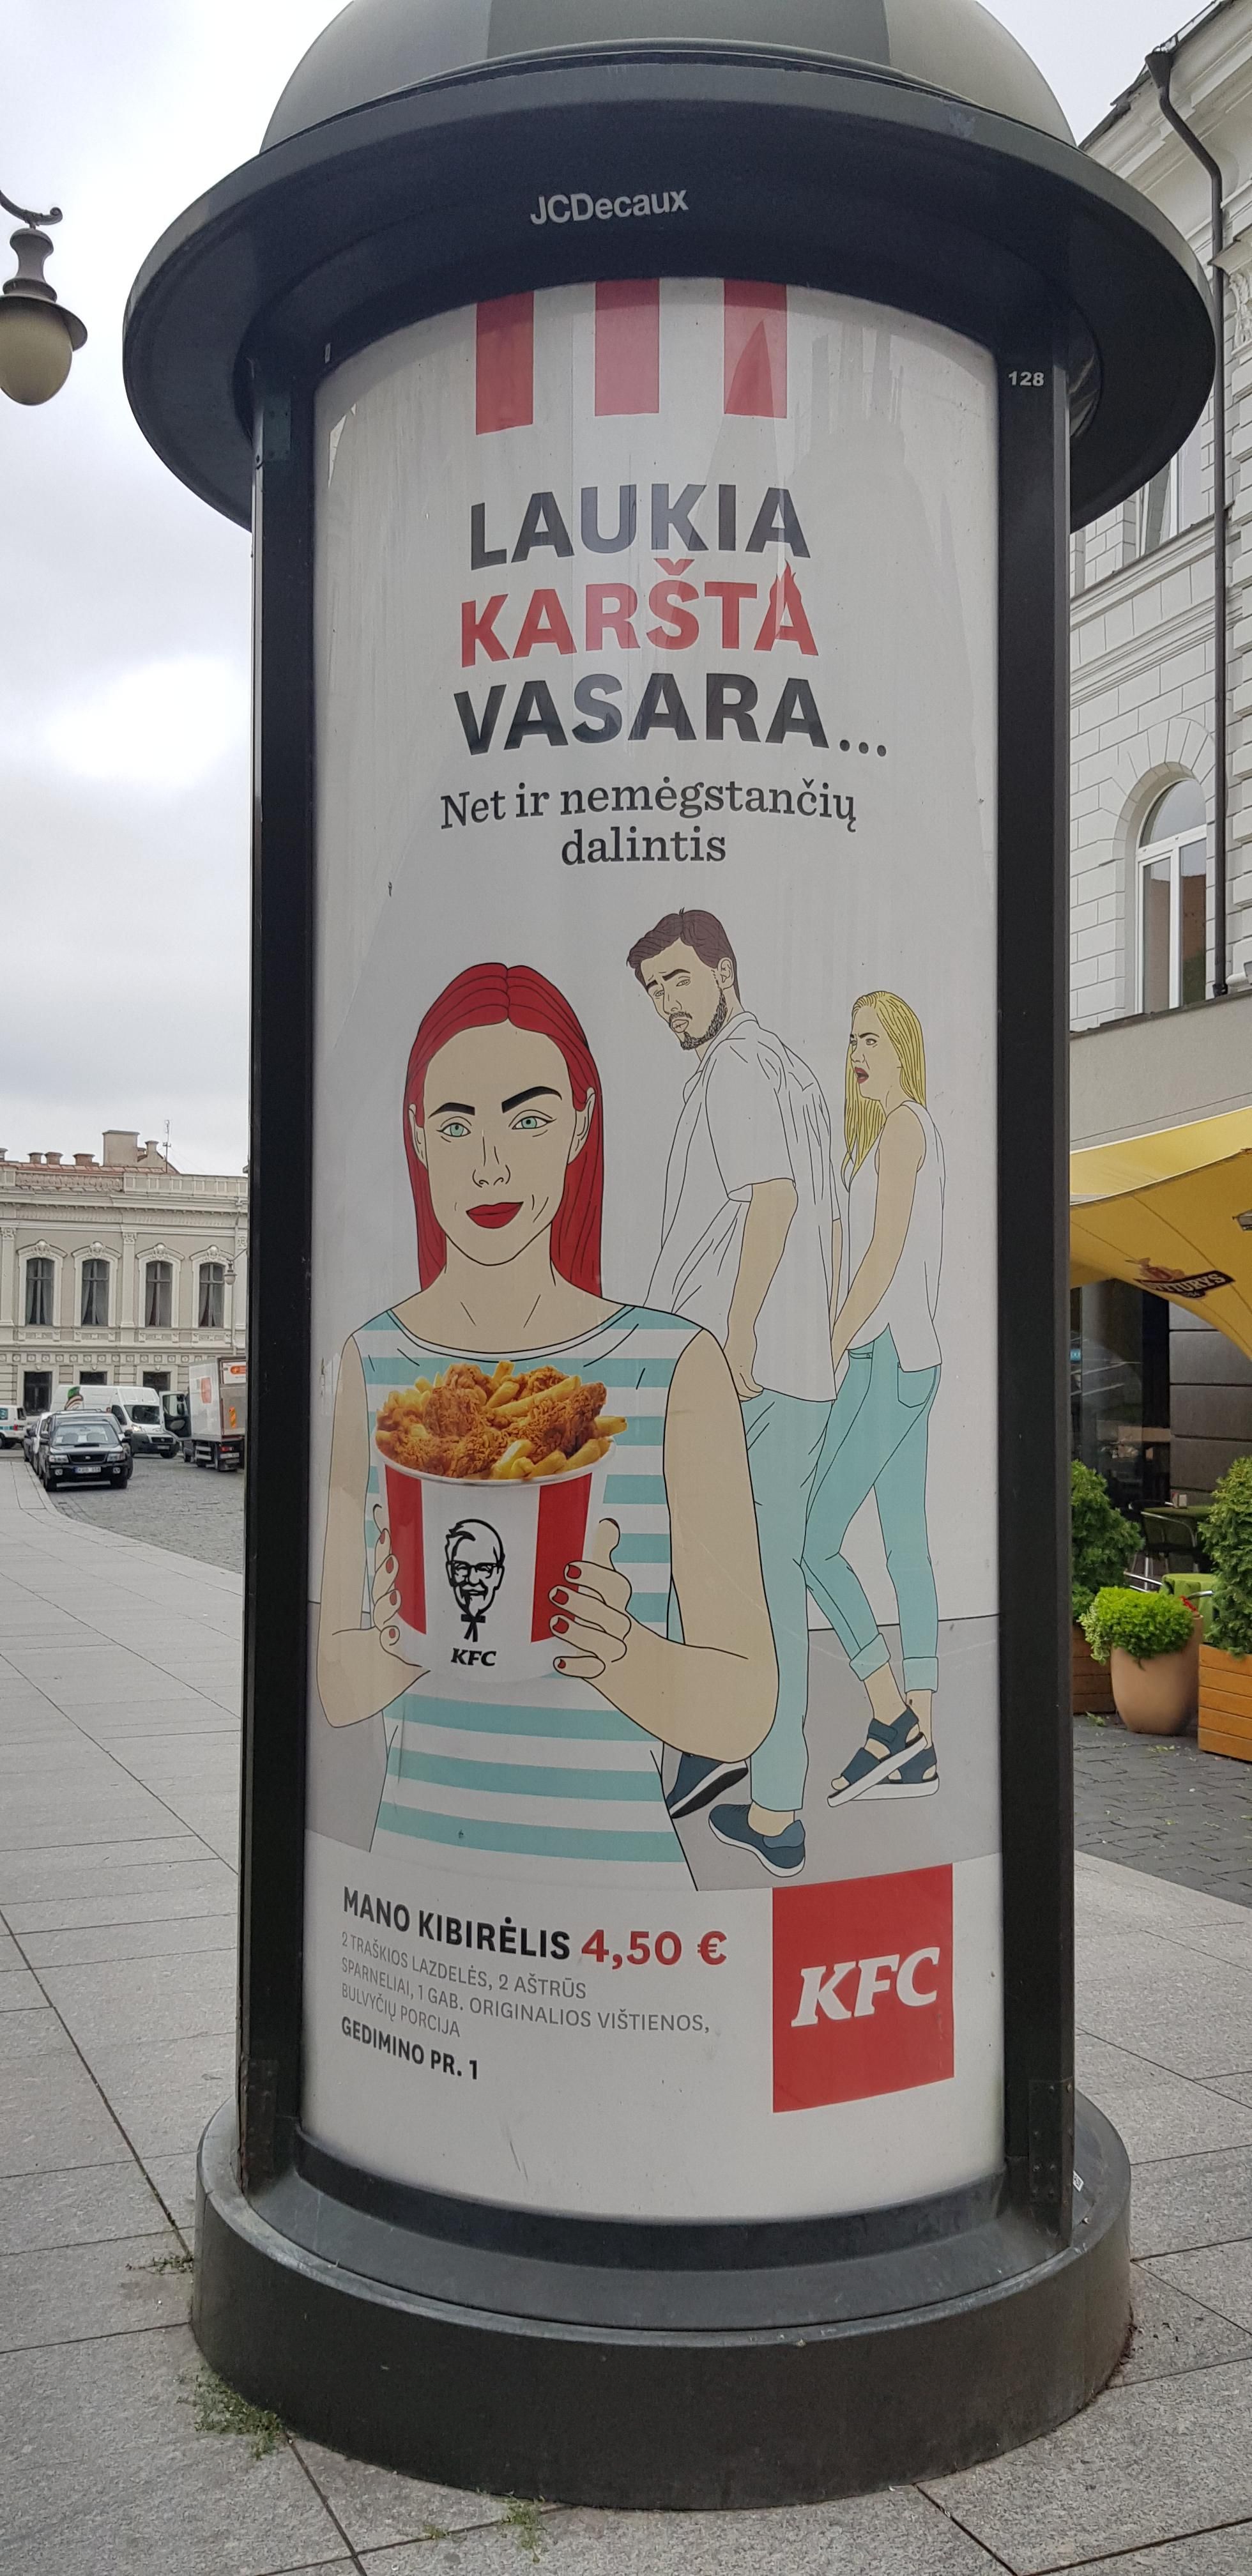 KFC Lithuania has the best marketing strategies